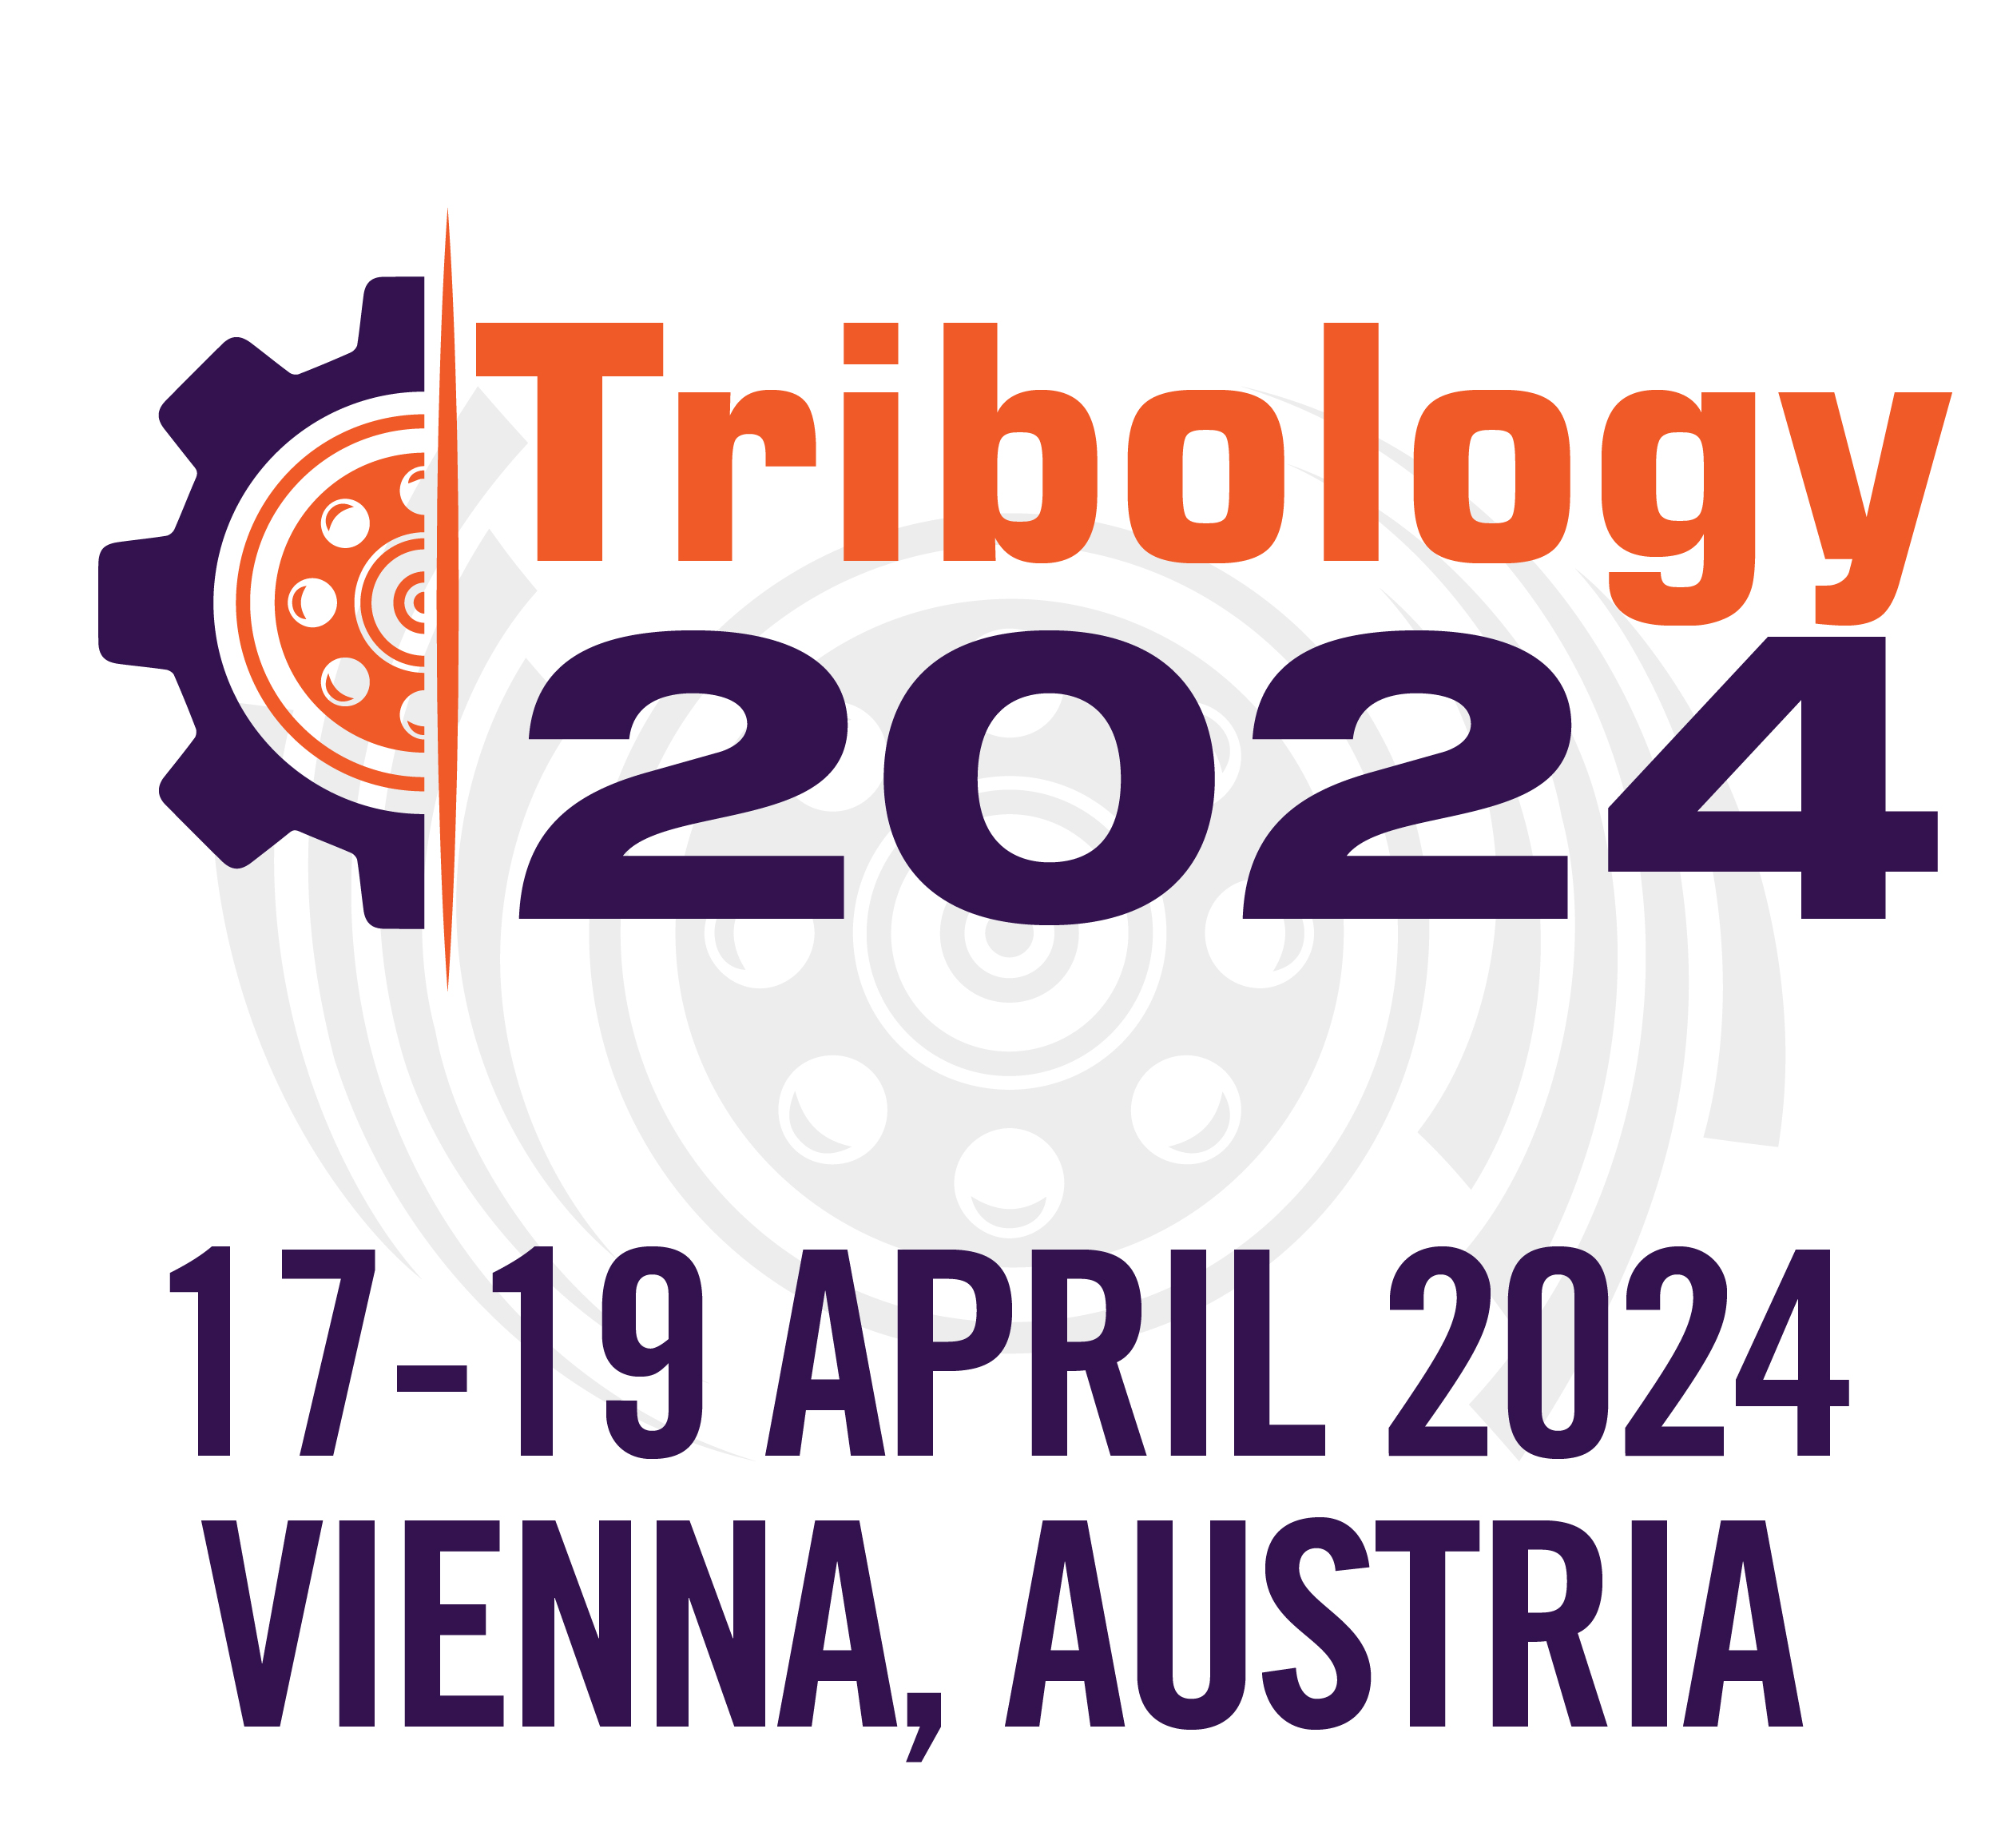 Tribology International Conference 2024